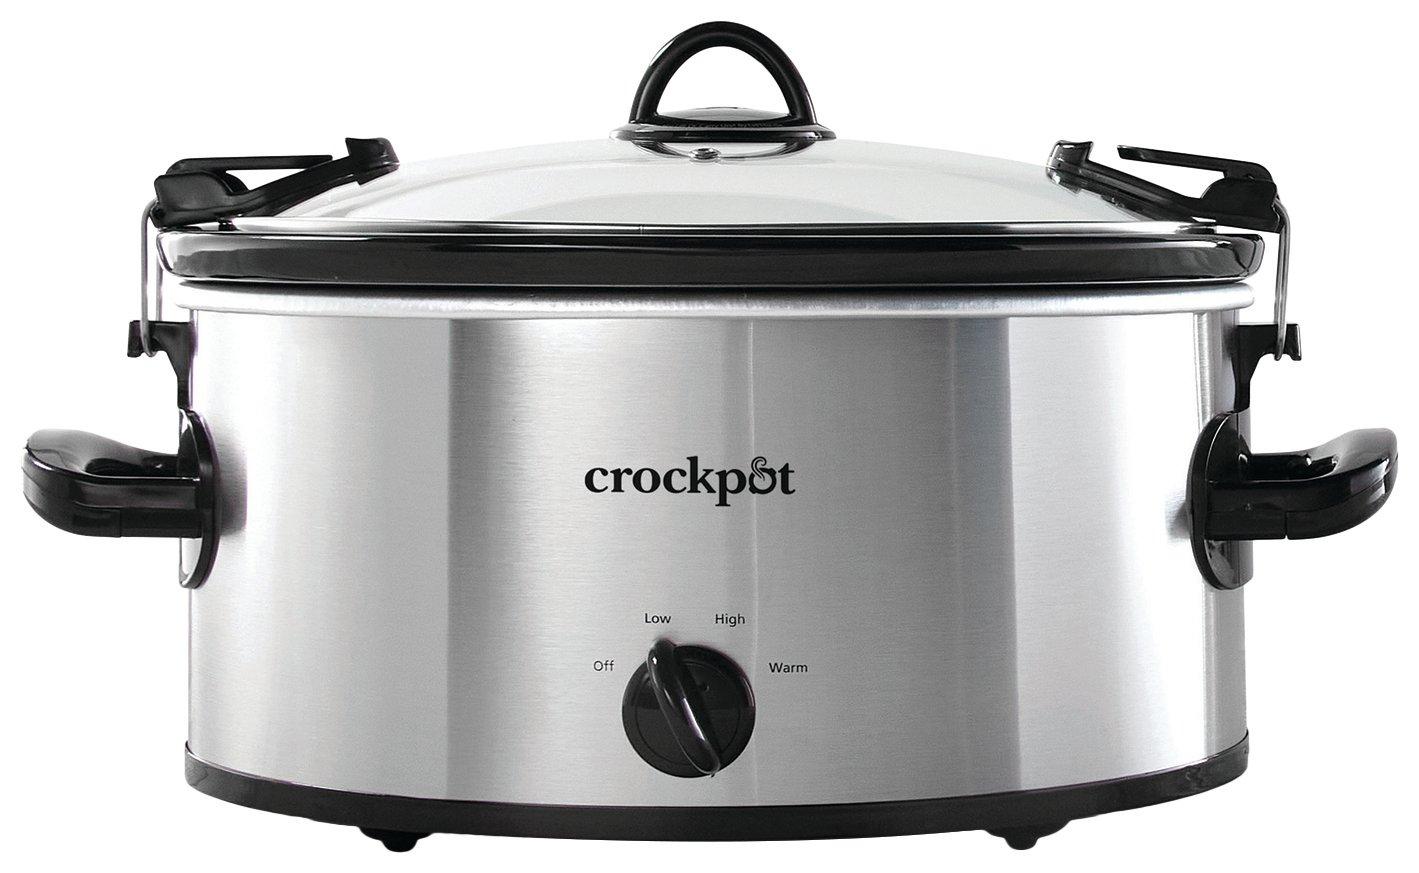 Crockpot 6 Quart Stainless Steel Slow Cooker